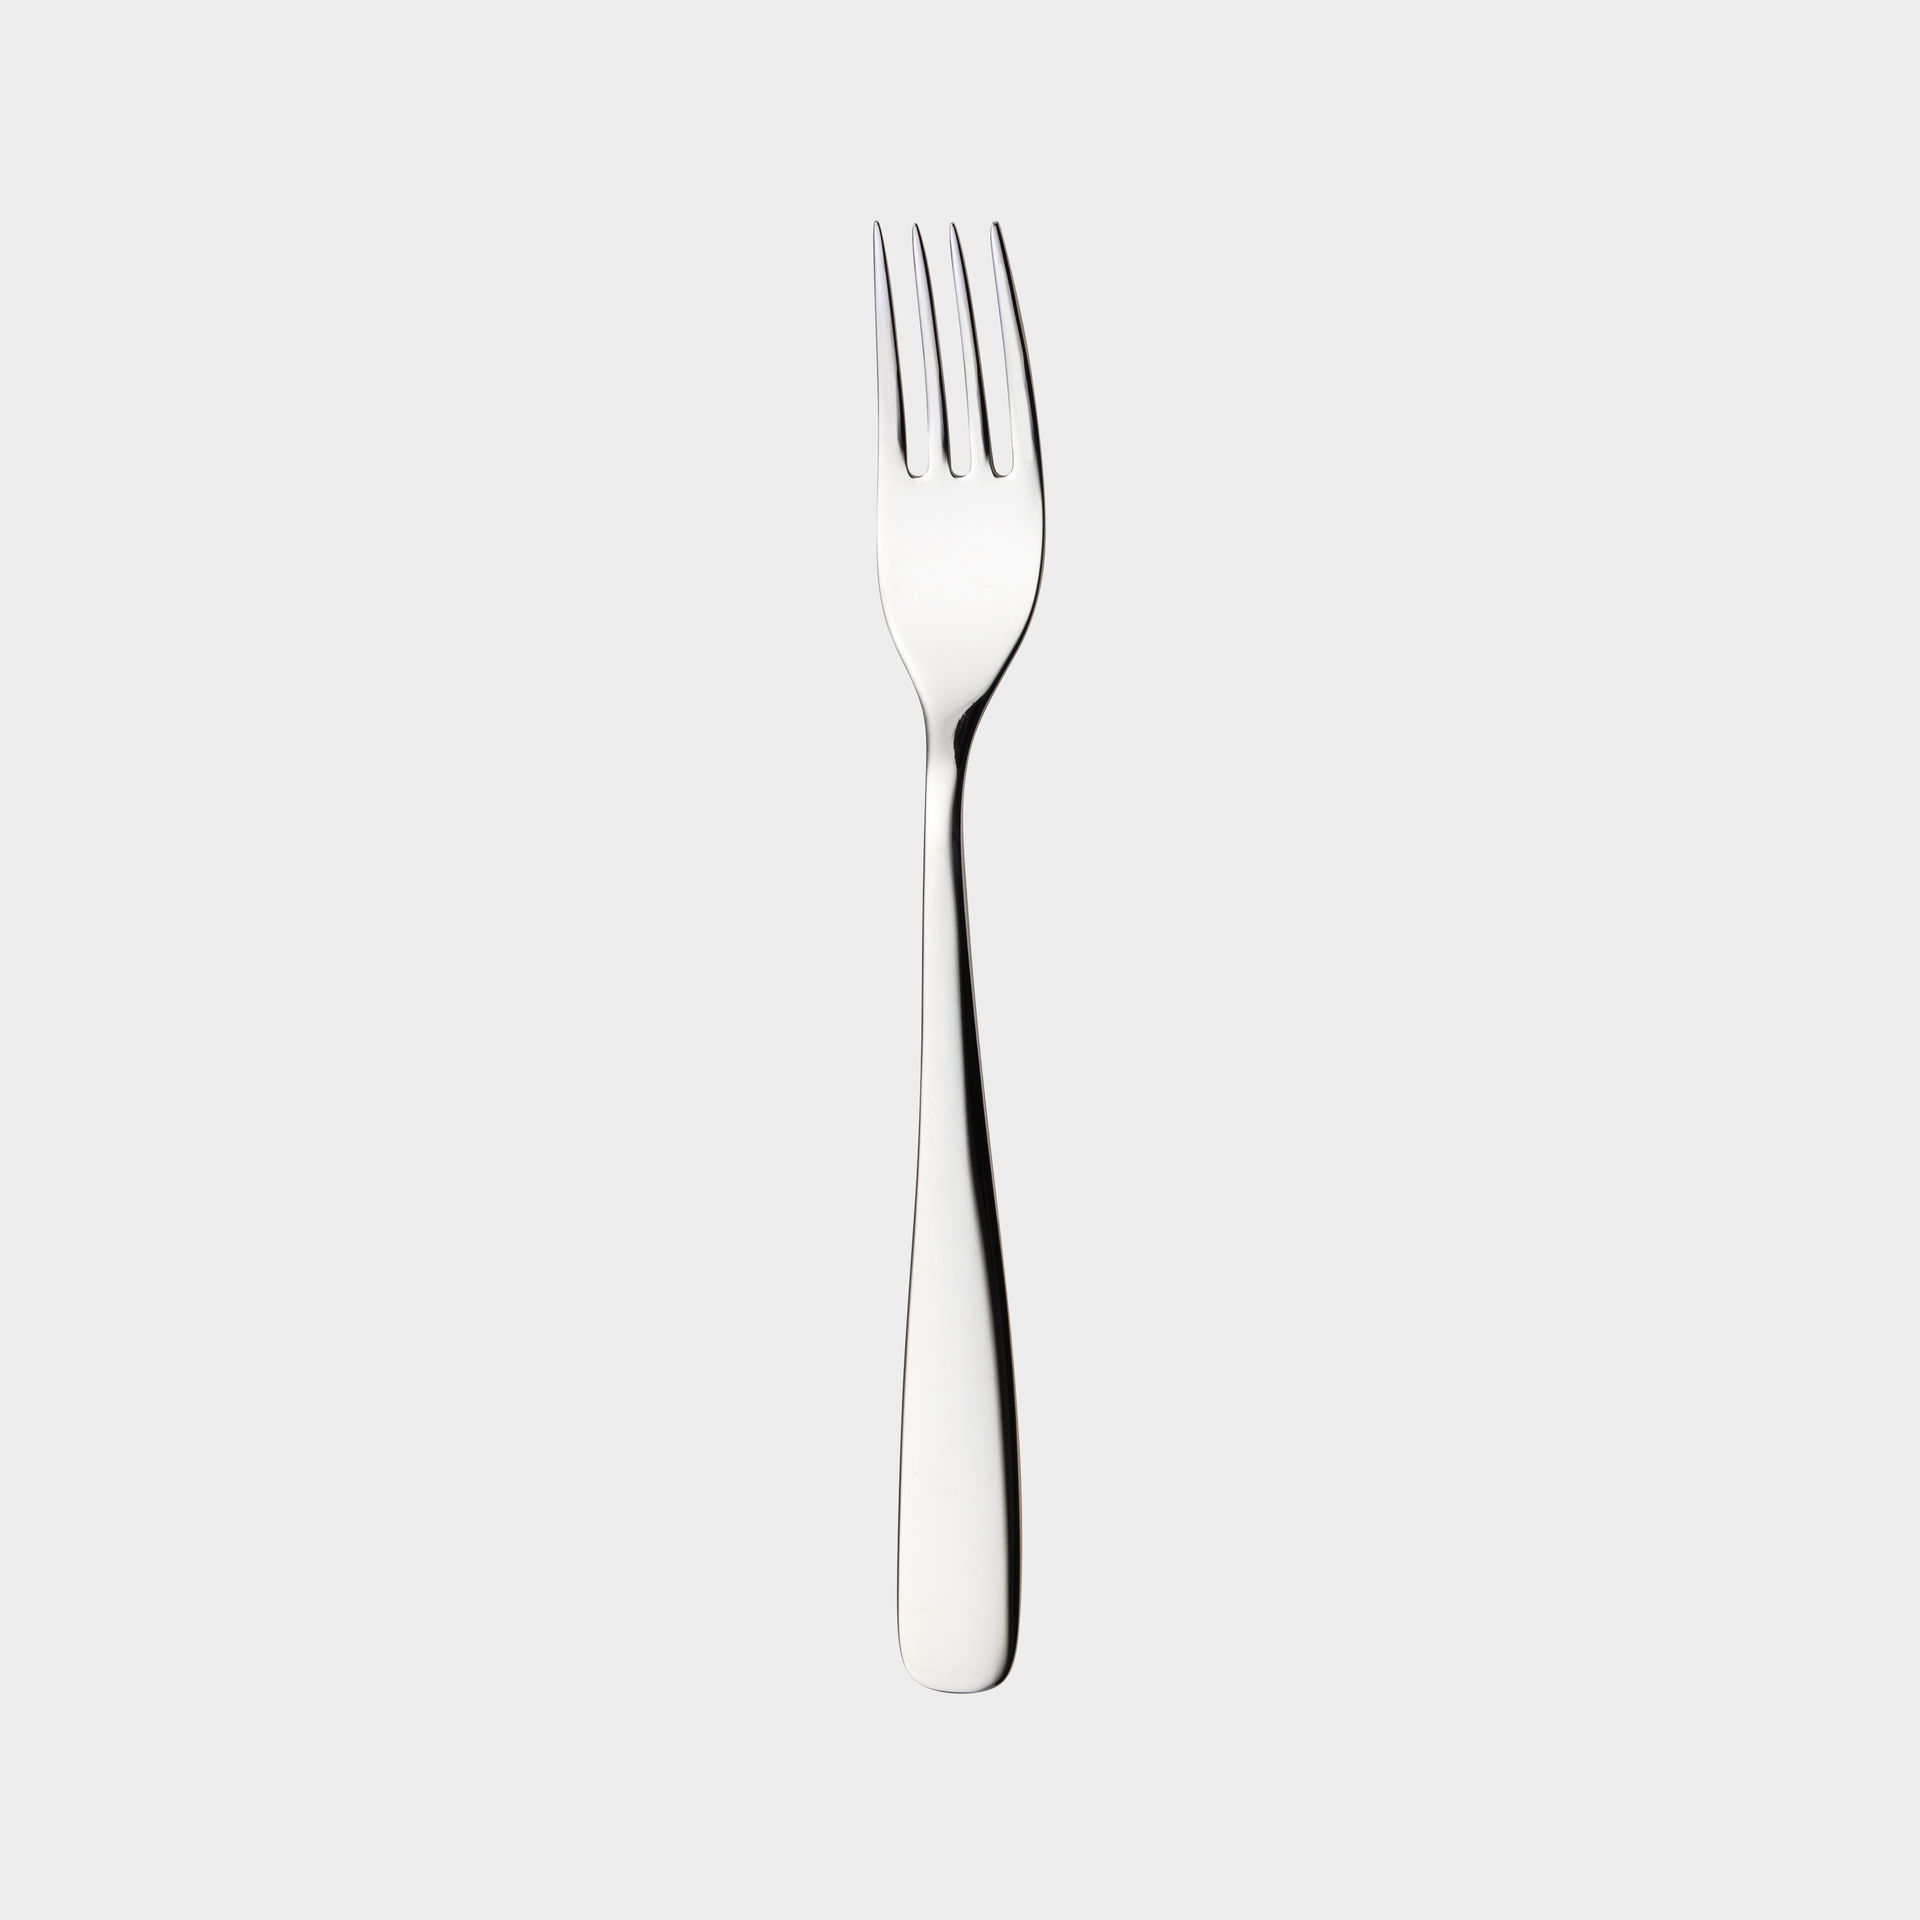 Tuva dinner fork product image